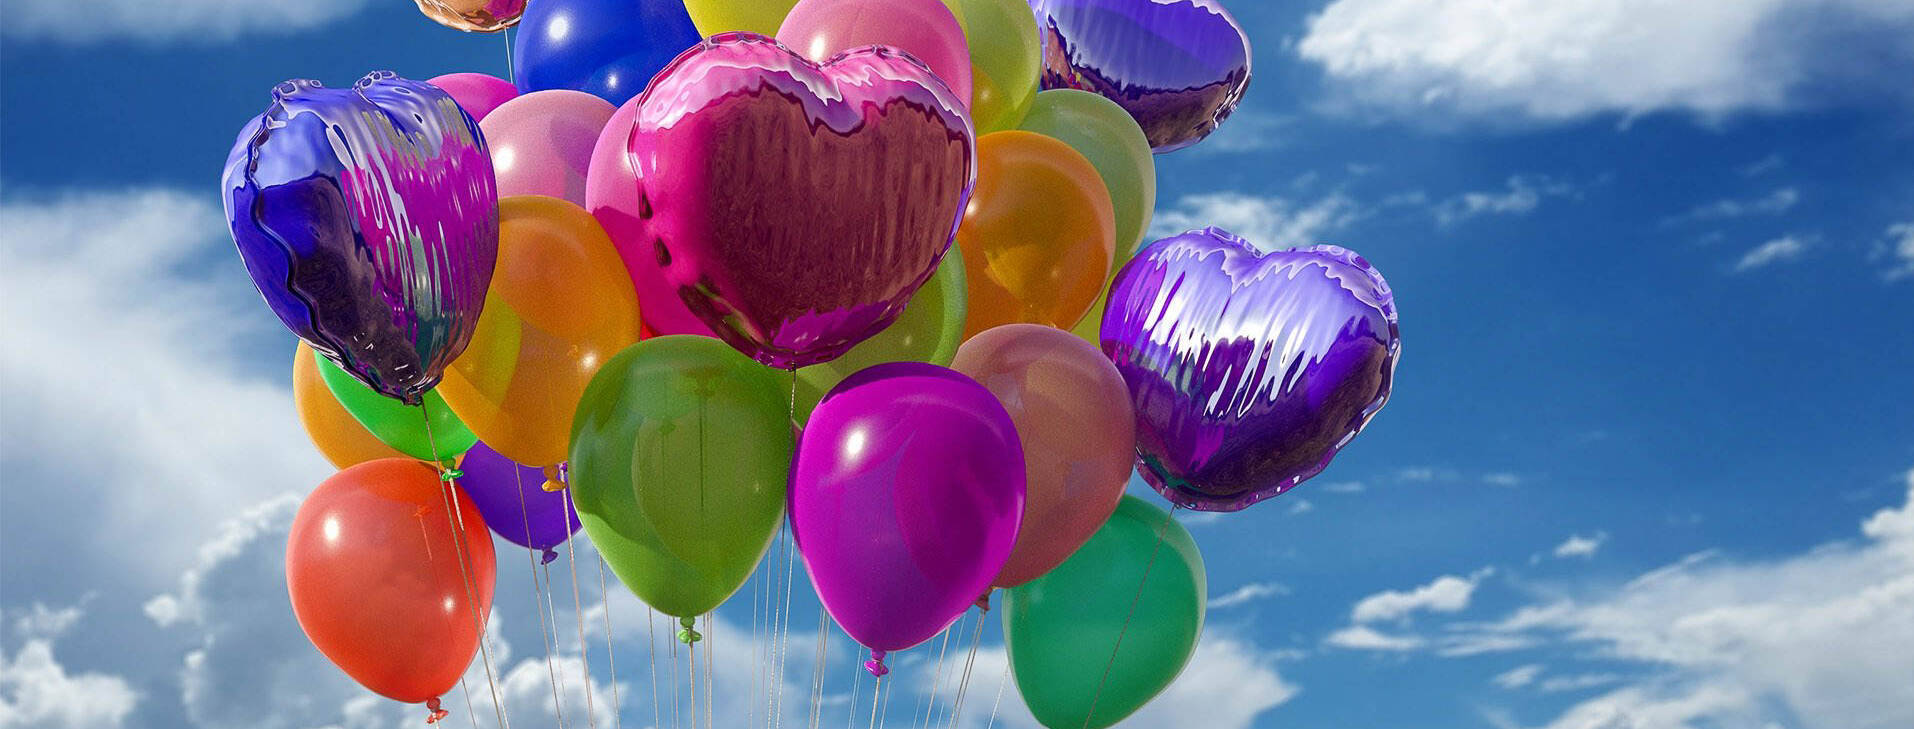 Bunte Luftballons steigen in den Himmel.